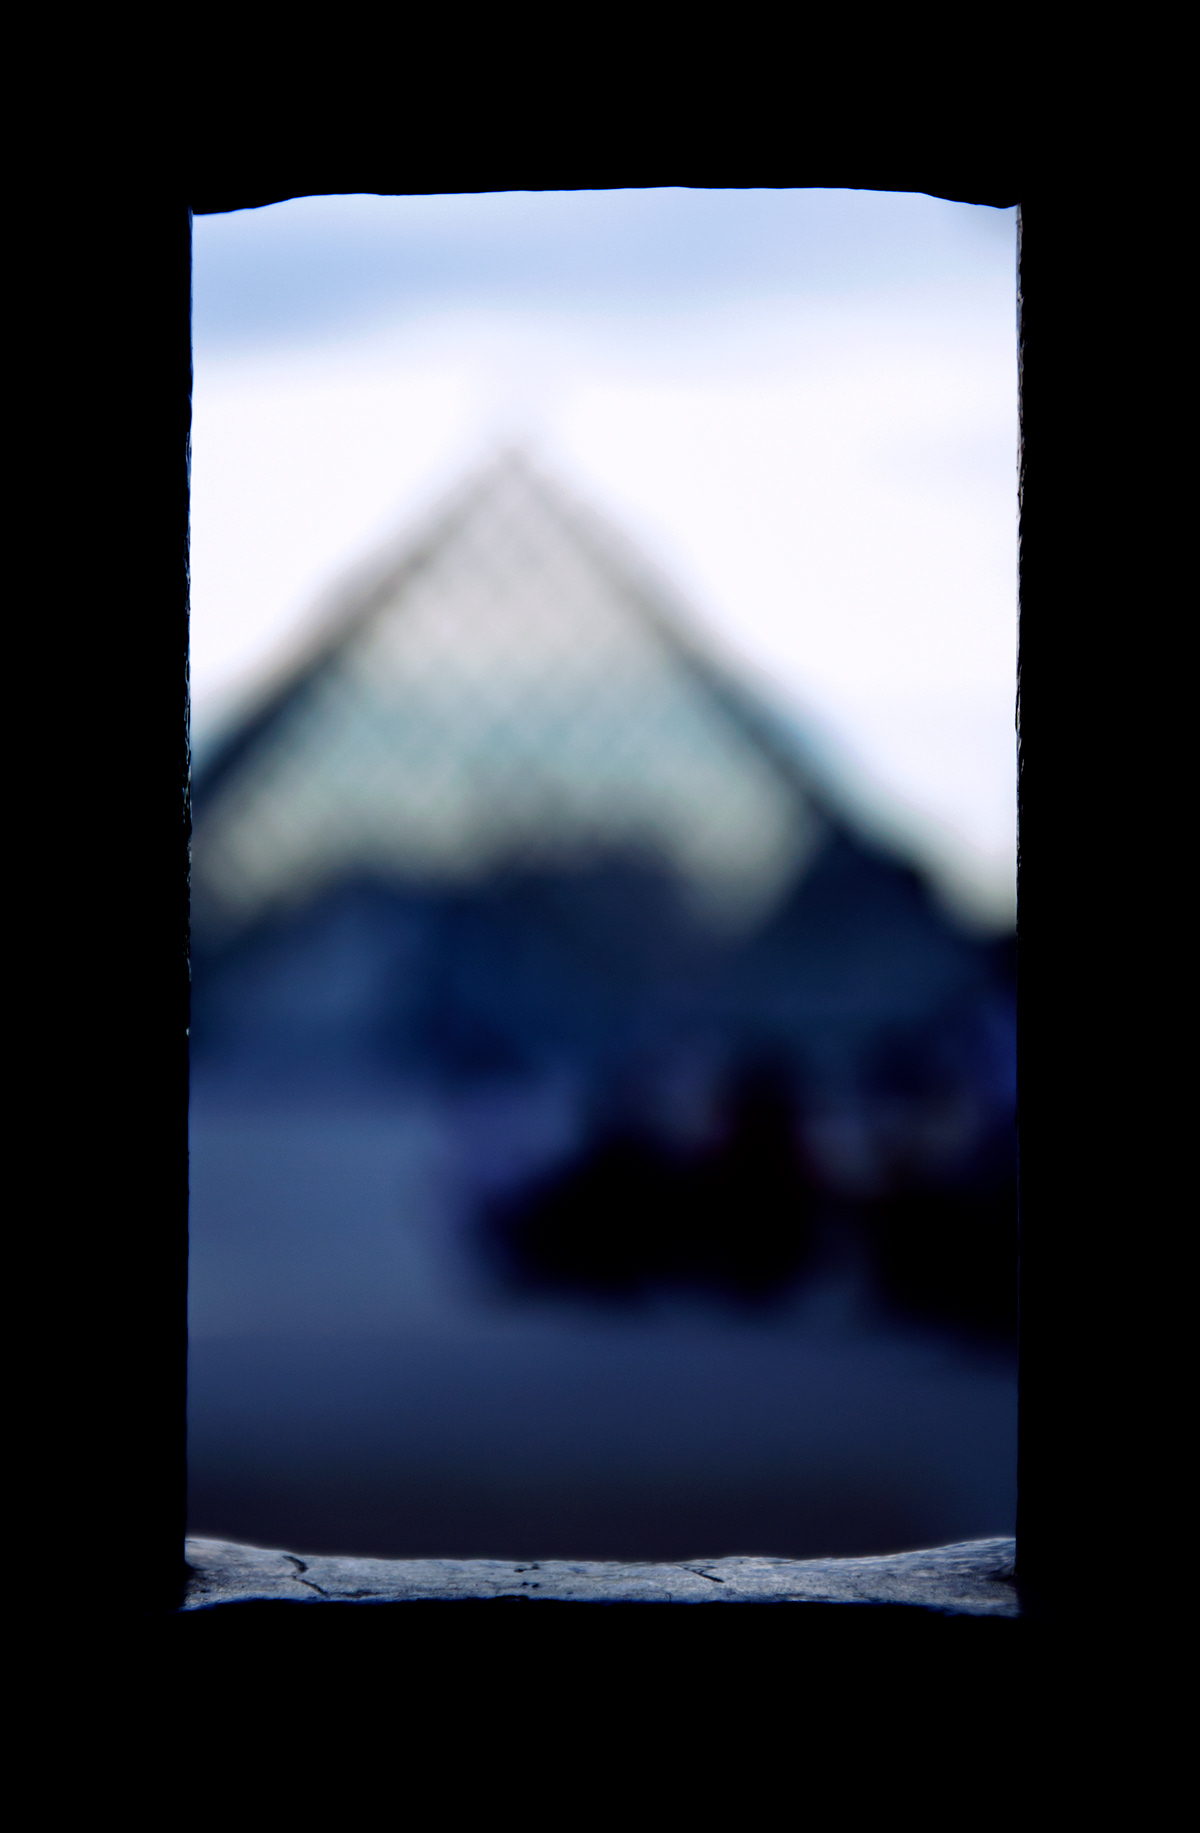 Paris louvre pyramid pyramide monument france night idea